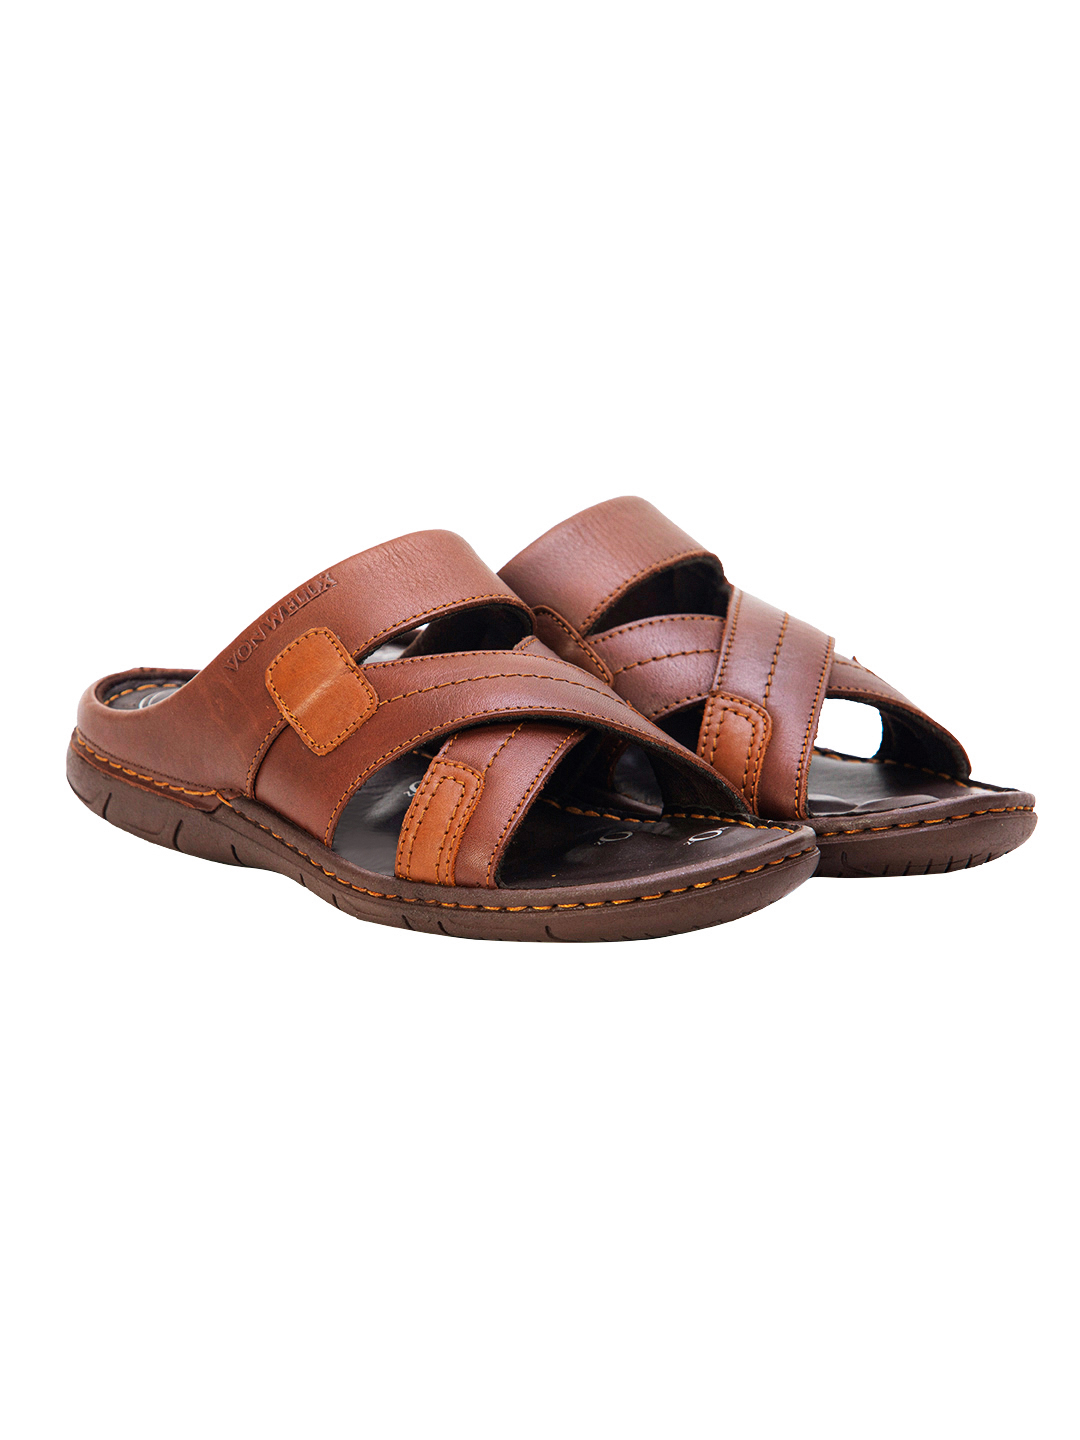 Buy Von Wellx Germany Comfort Rove Brown Slippers Online in Qatar